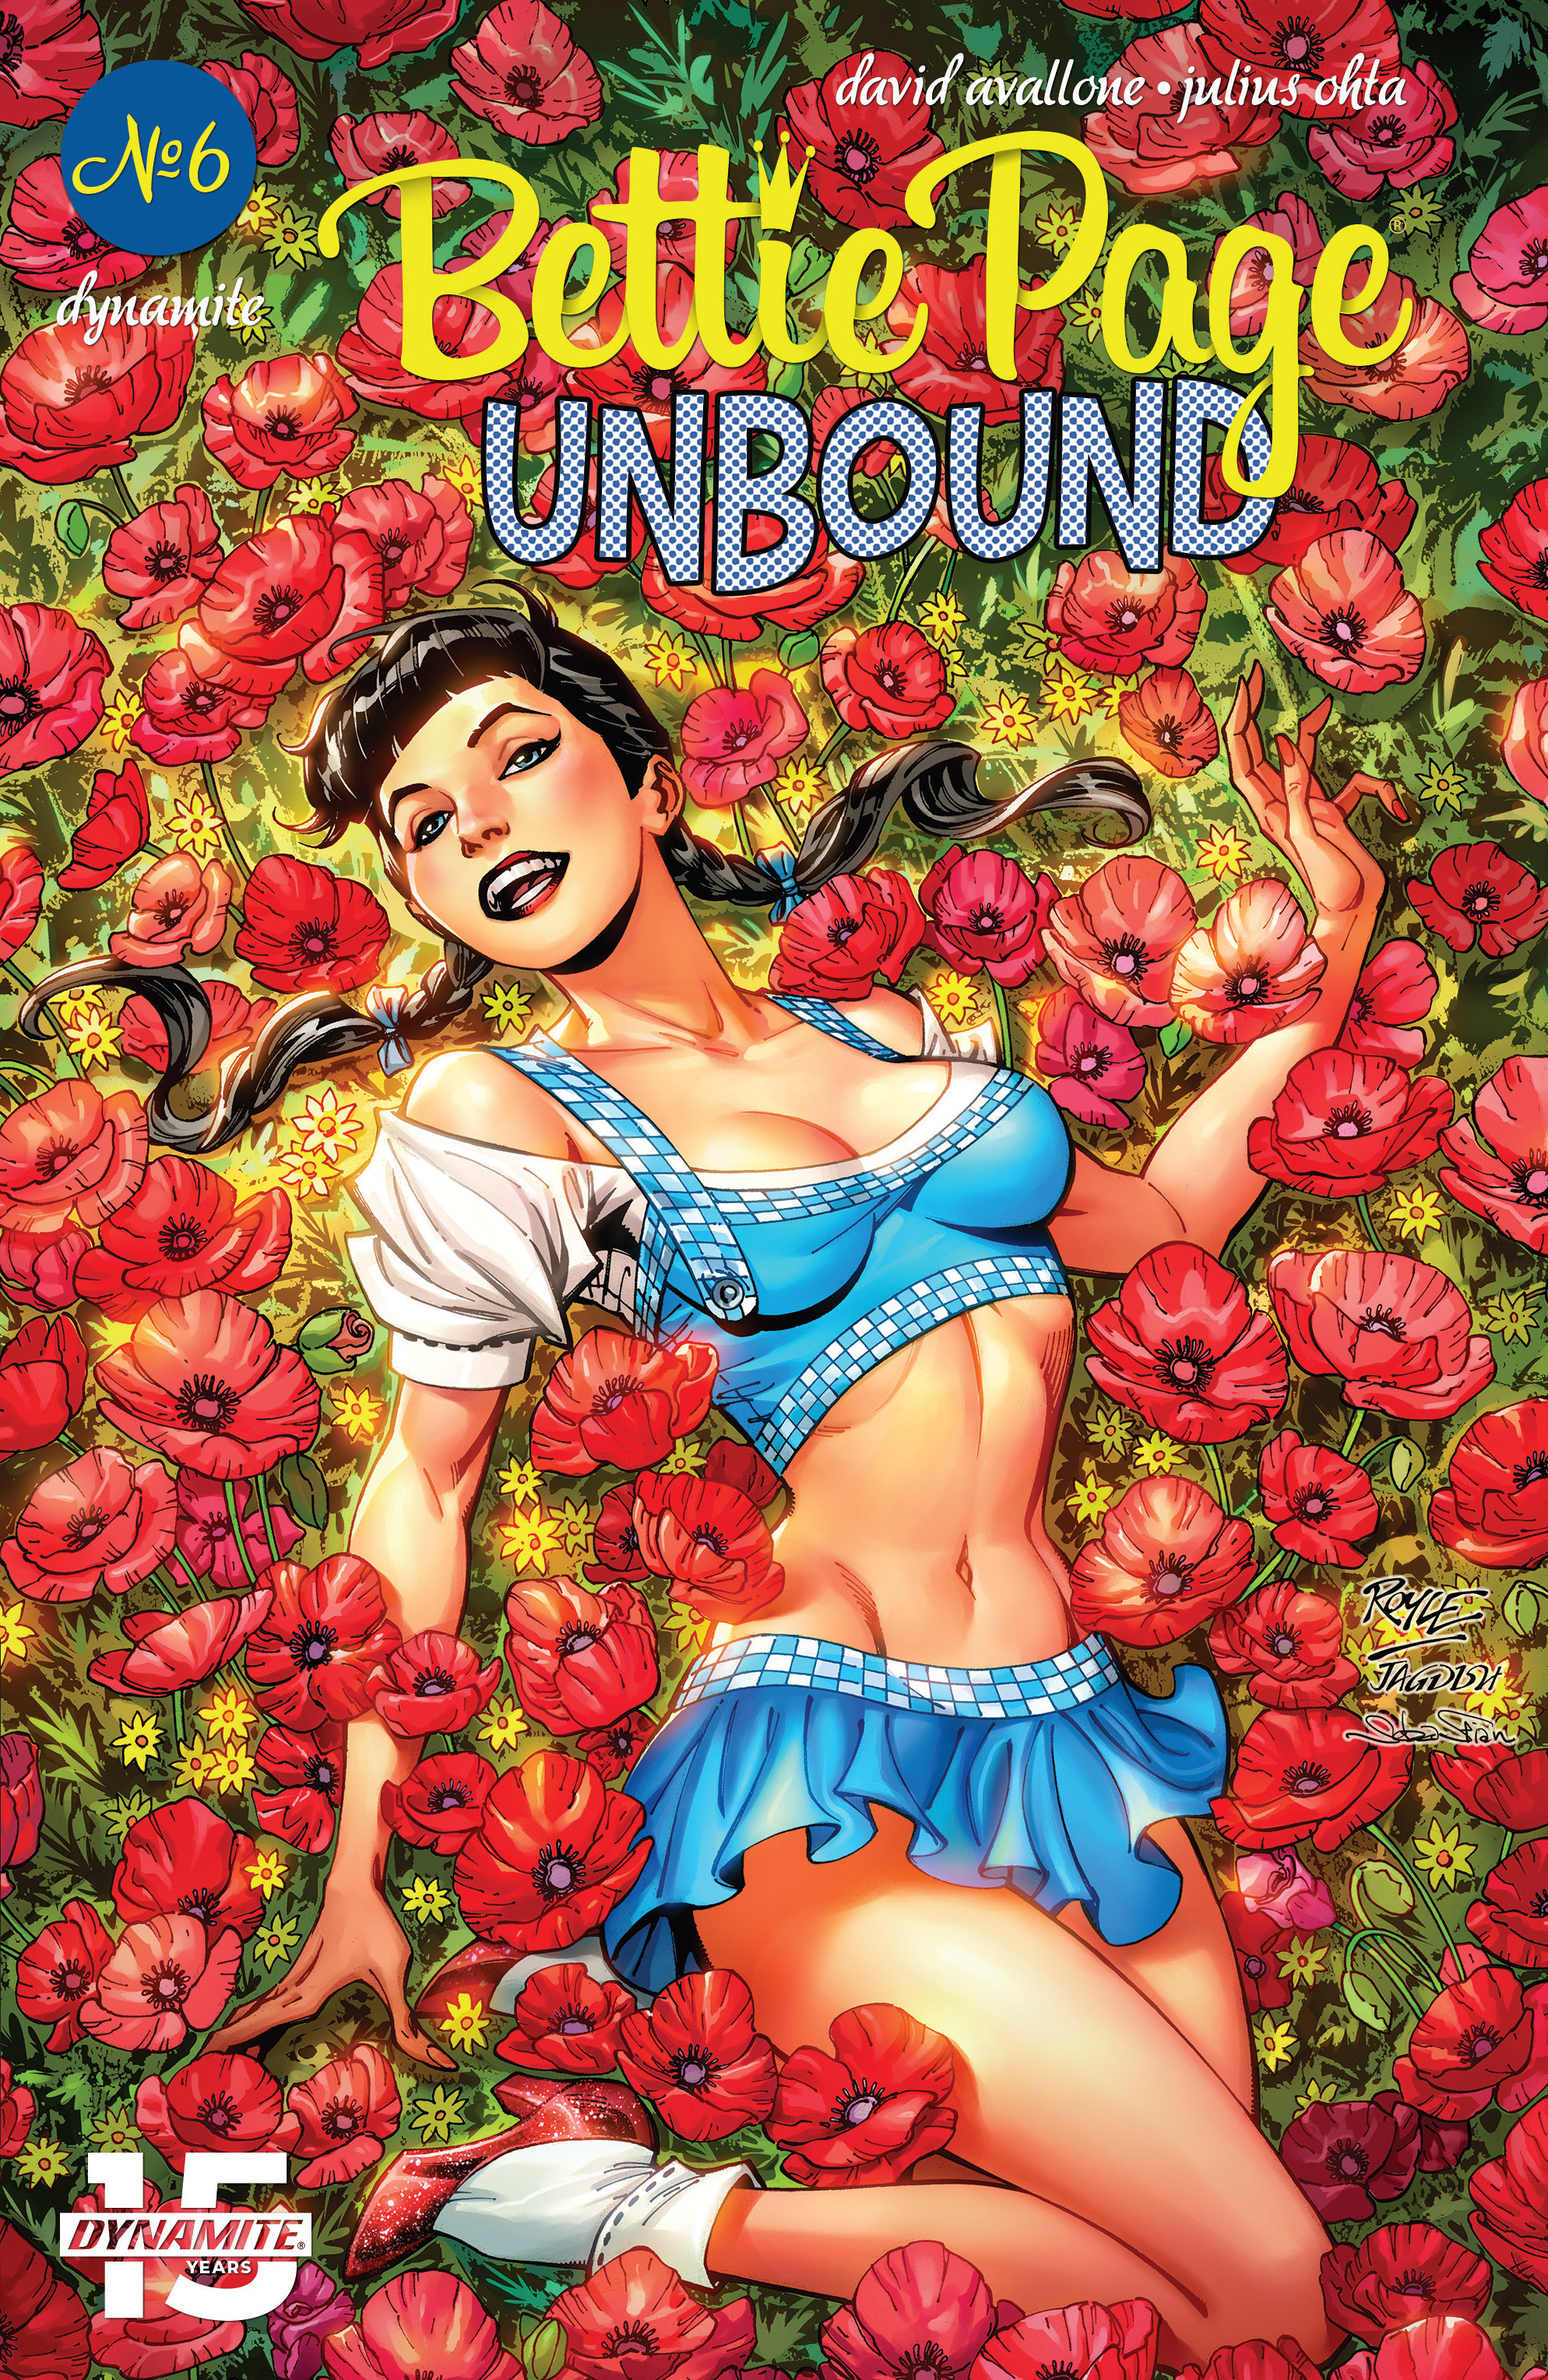 Read online Bettie Page: Unbound comic -  Issue #6 - 1